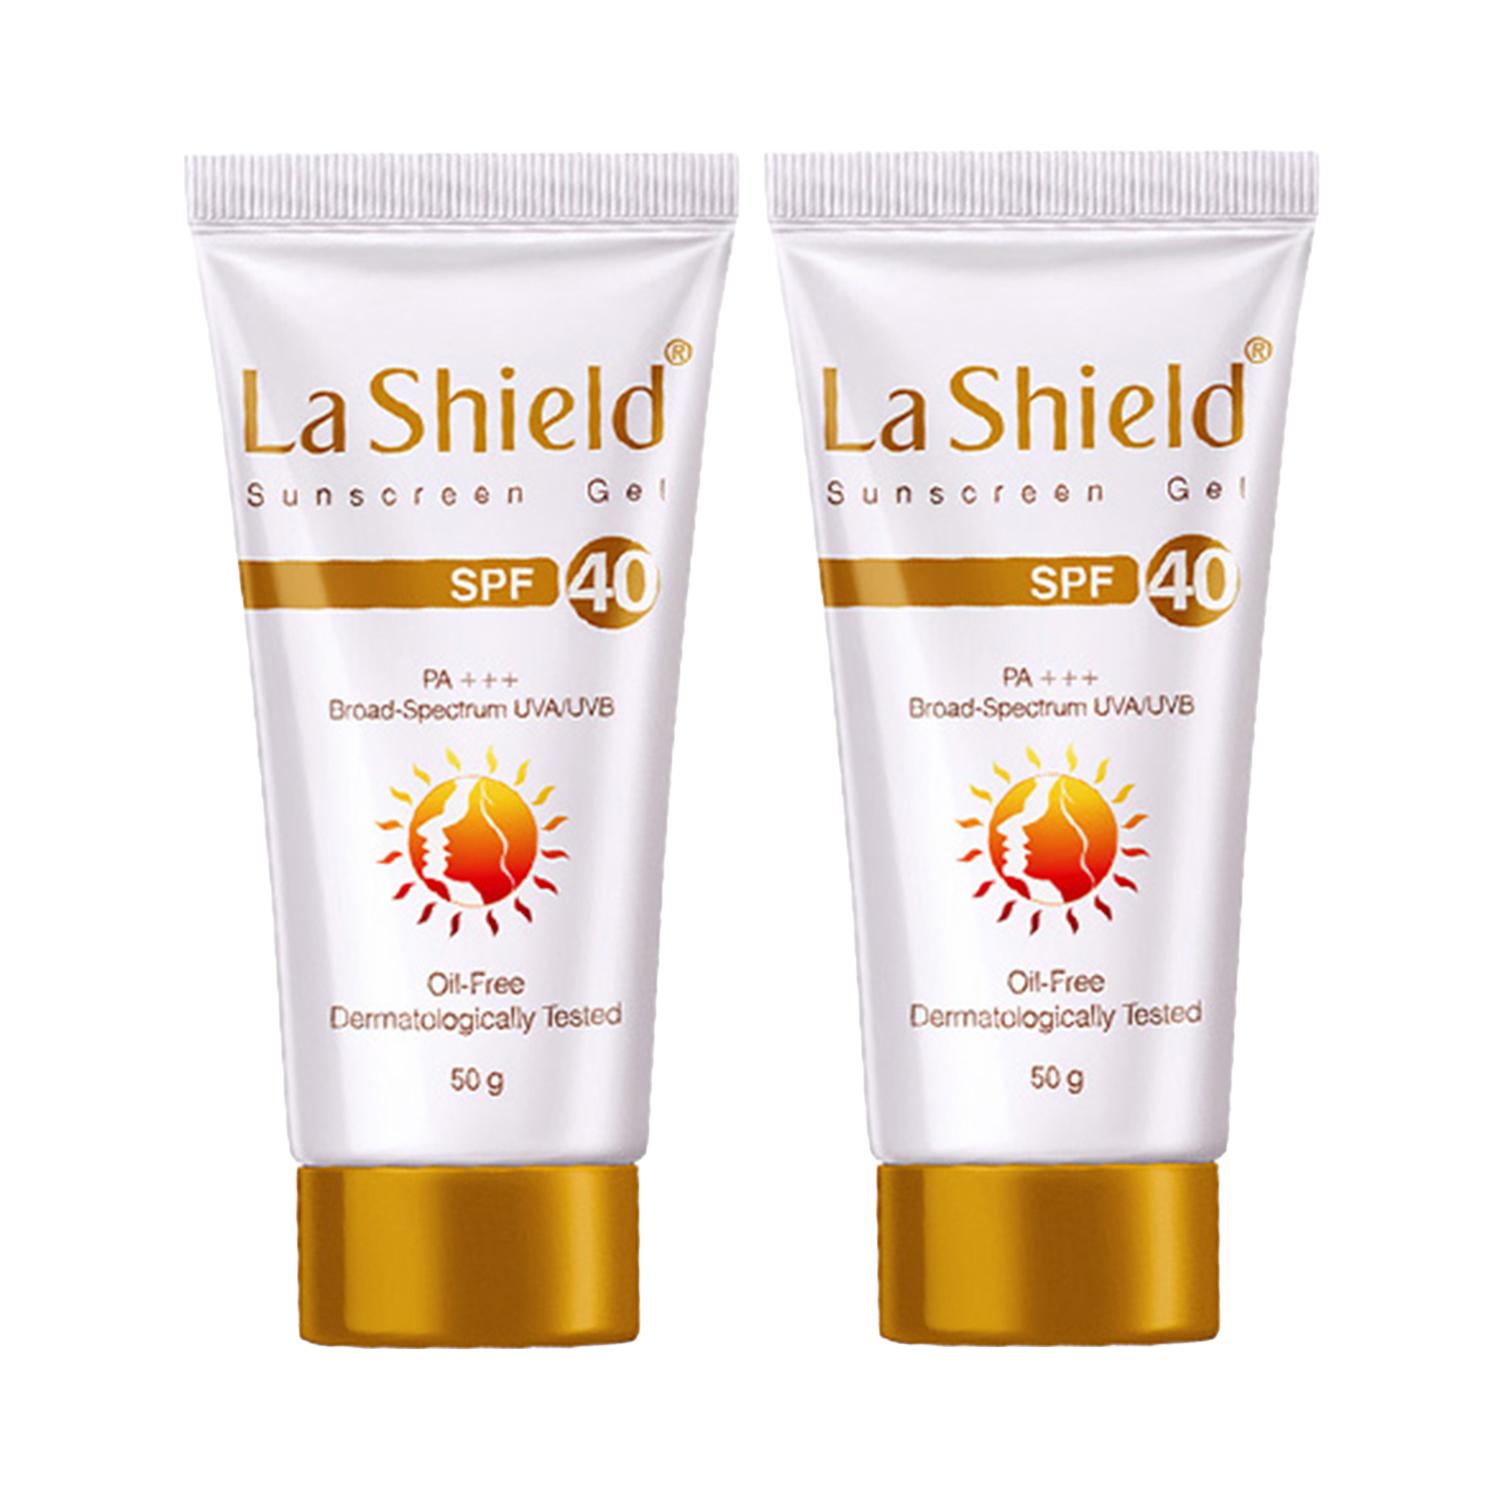 La Shield | La Shield Anti Acne SPF 40+ & PA+++ Sunscreen Gel Pack of 2 (60 g) Combo